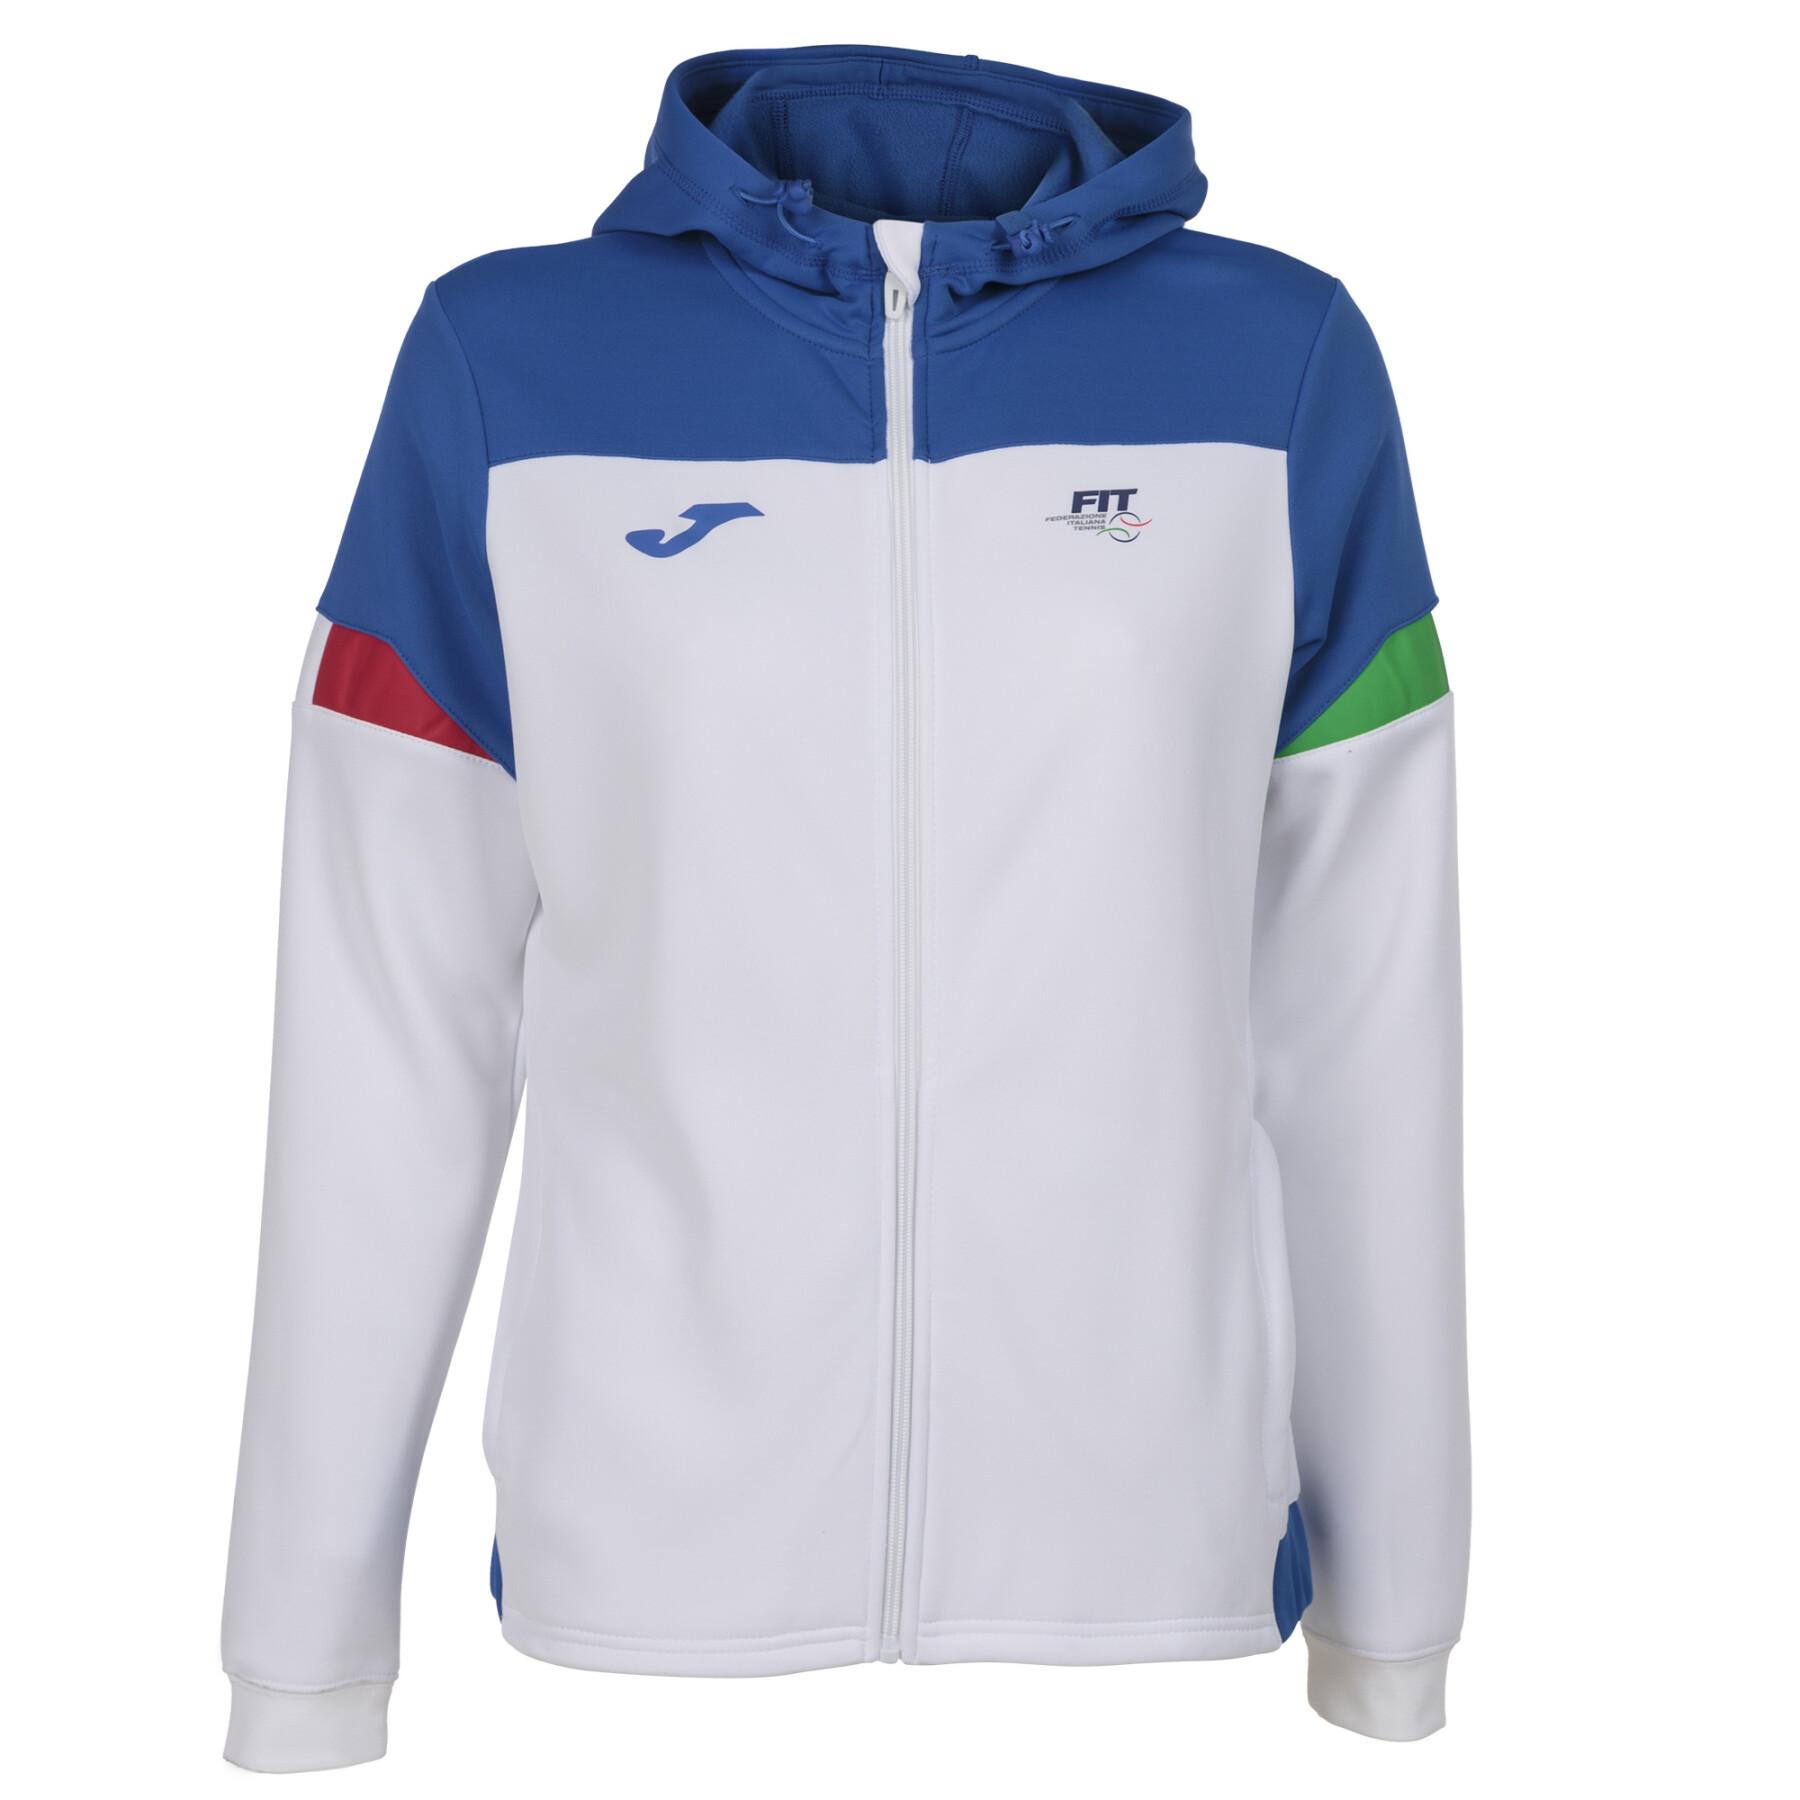 Italian tennis federation jacket for women Joma